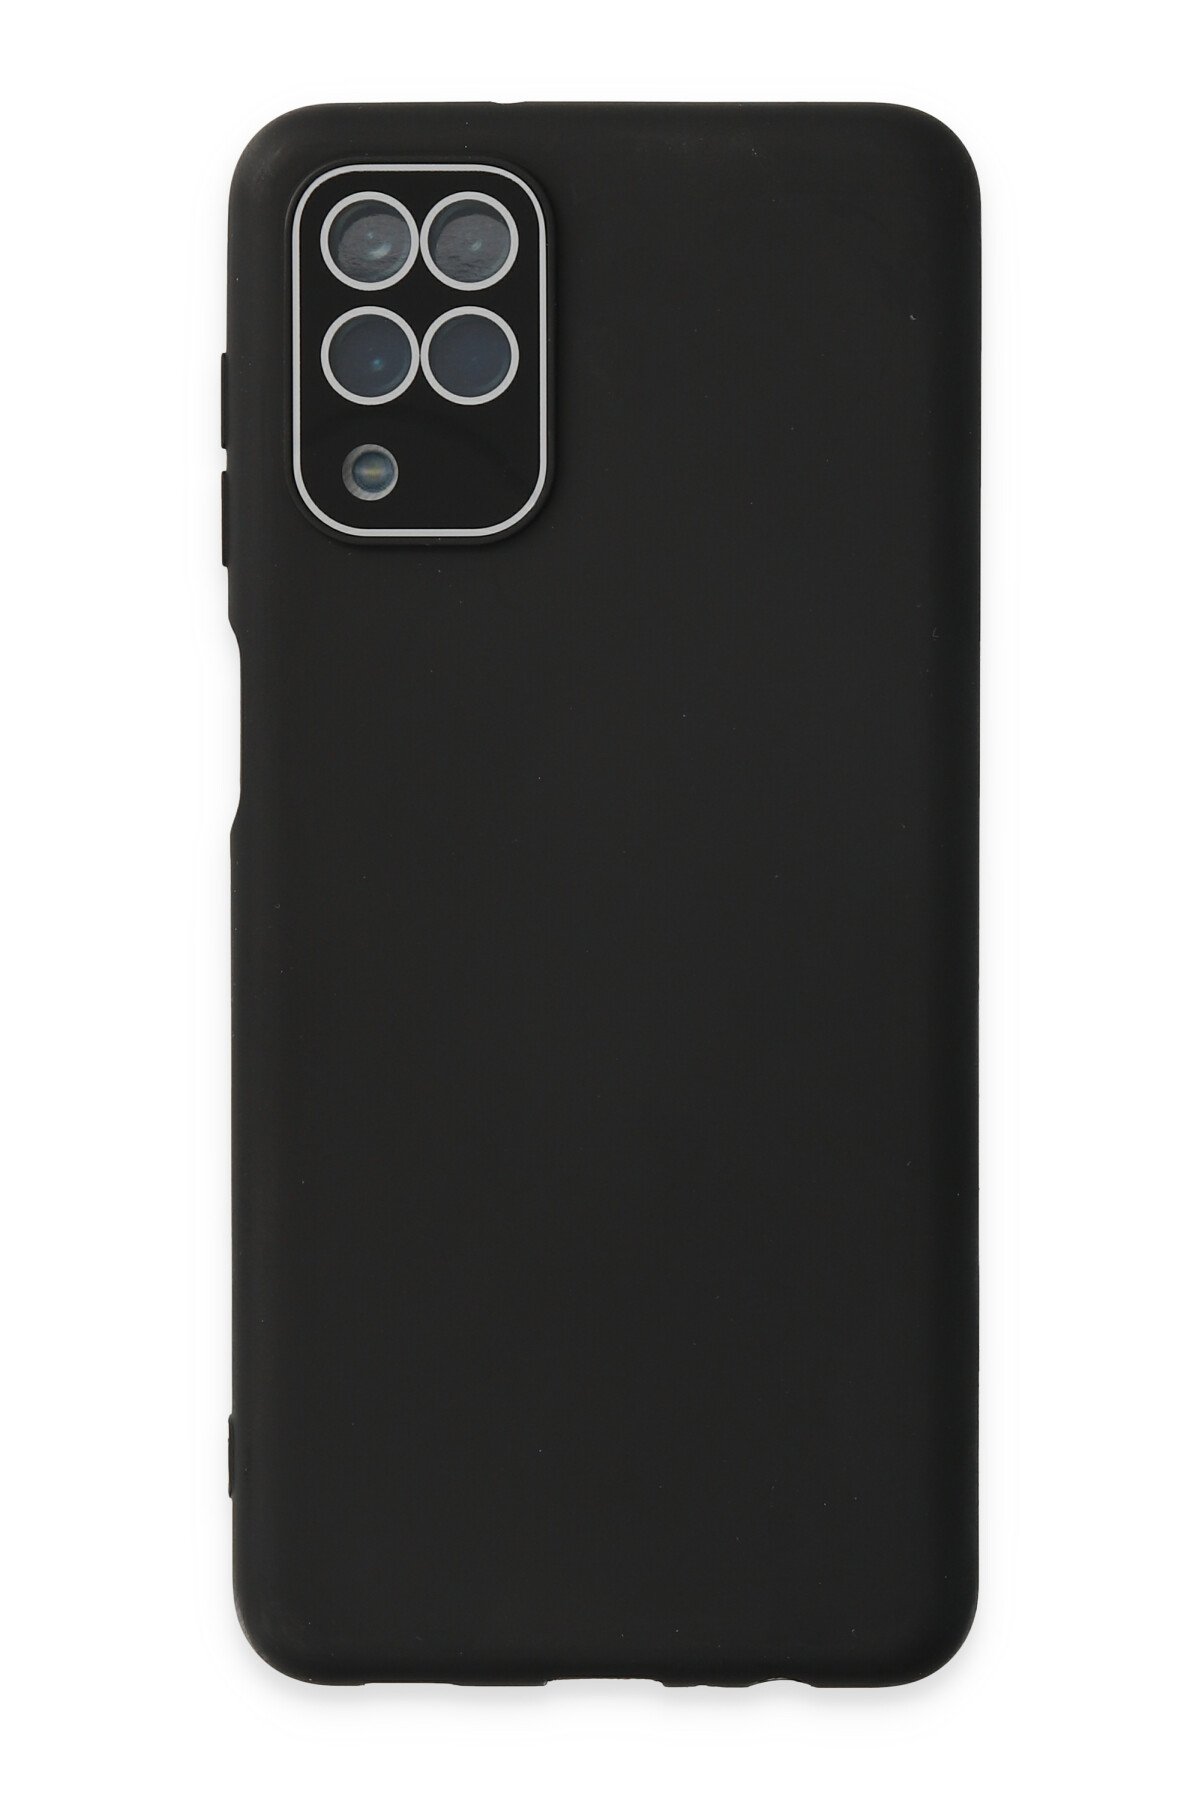 Newface Samsung Galaxy M22 Kılıf Lansman Glass Kapak - Kırmızı